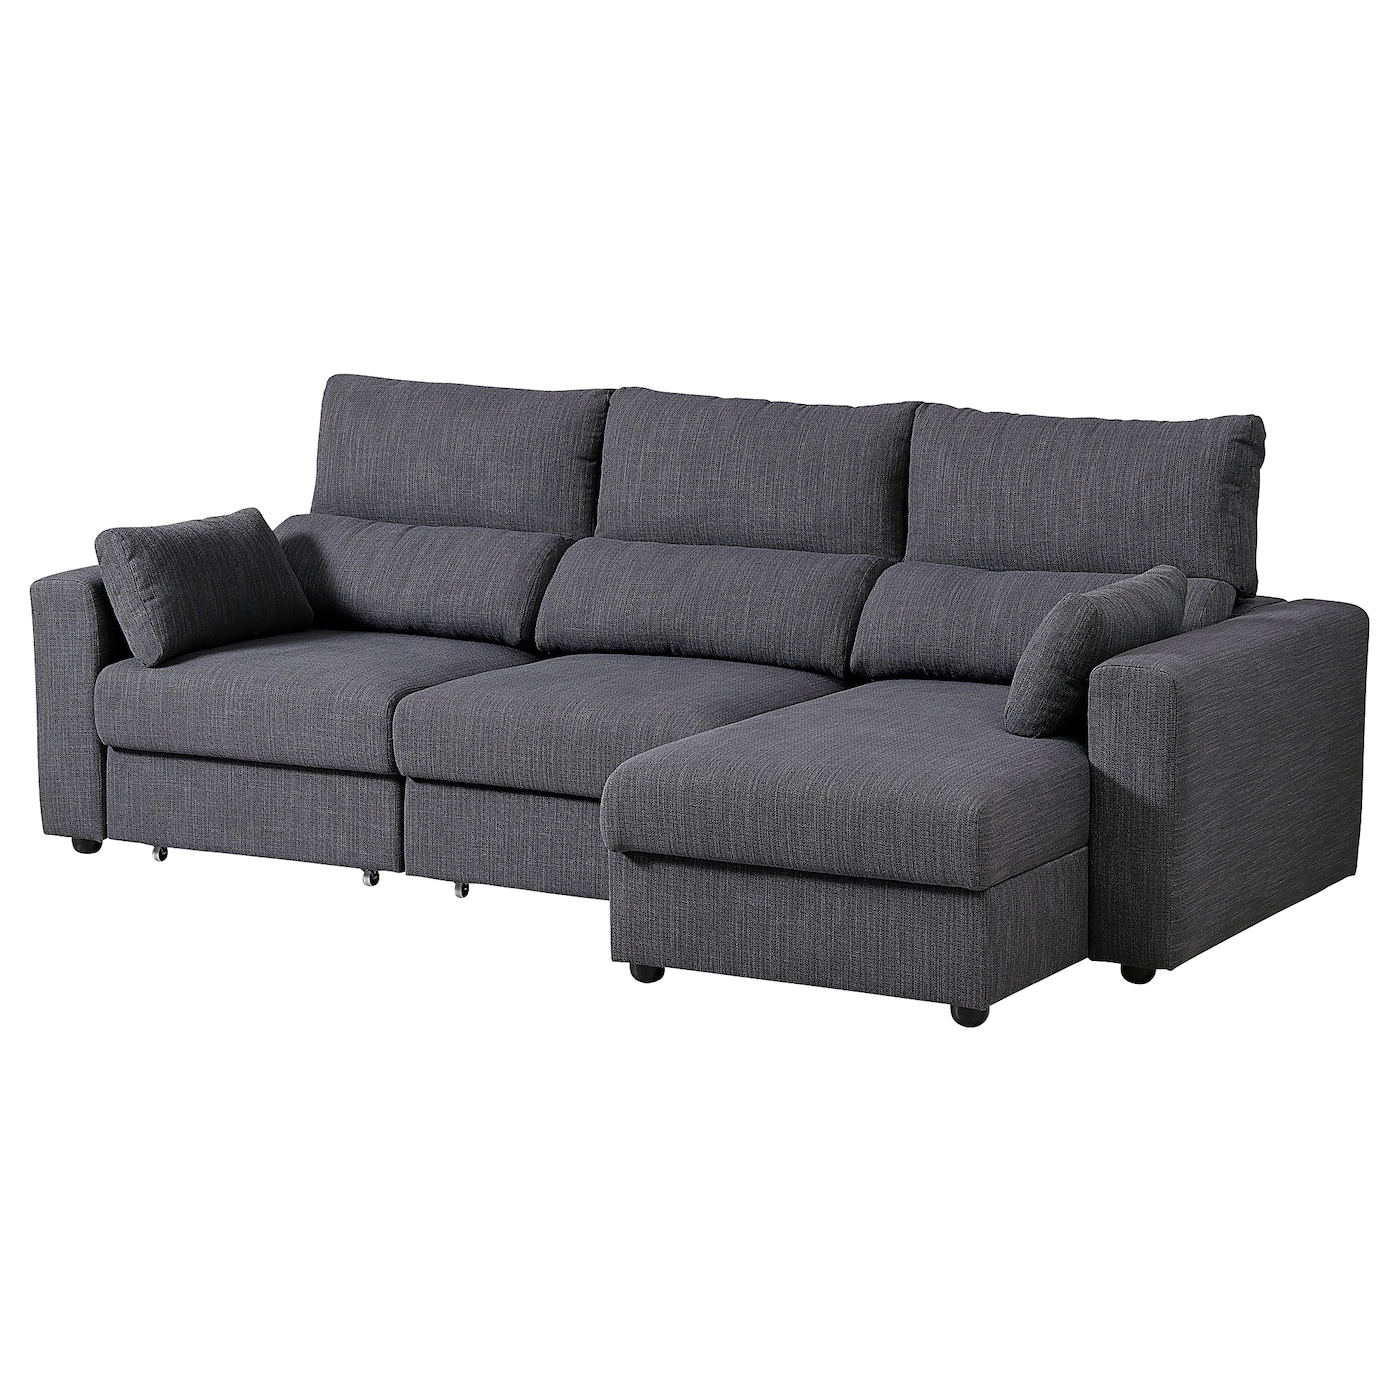 3-местный диван с шезлонгом - IKEA ESKILSTUNA,  100x162x268см, темно-серый, ЭСКИЛЬСТУНА ИКЕА